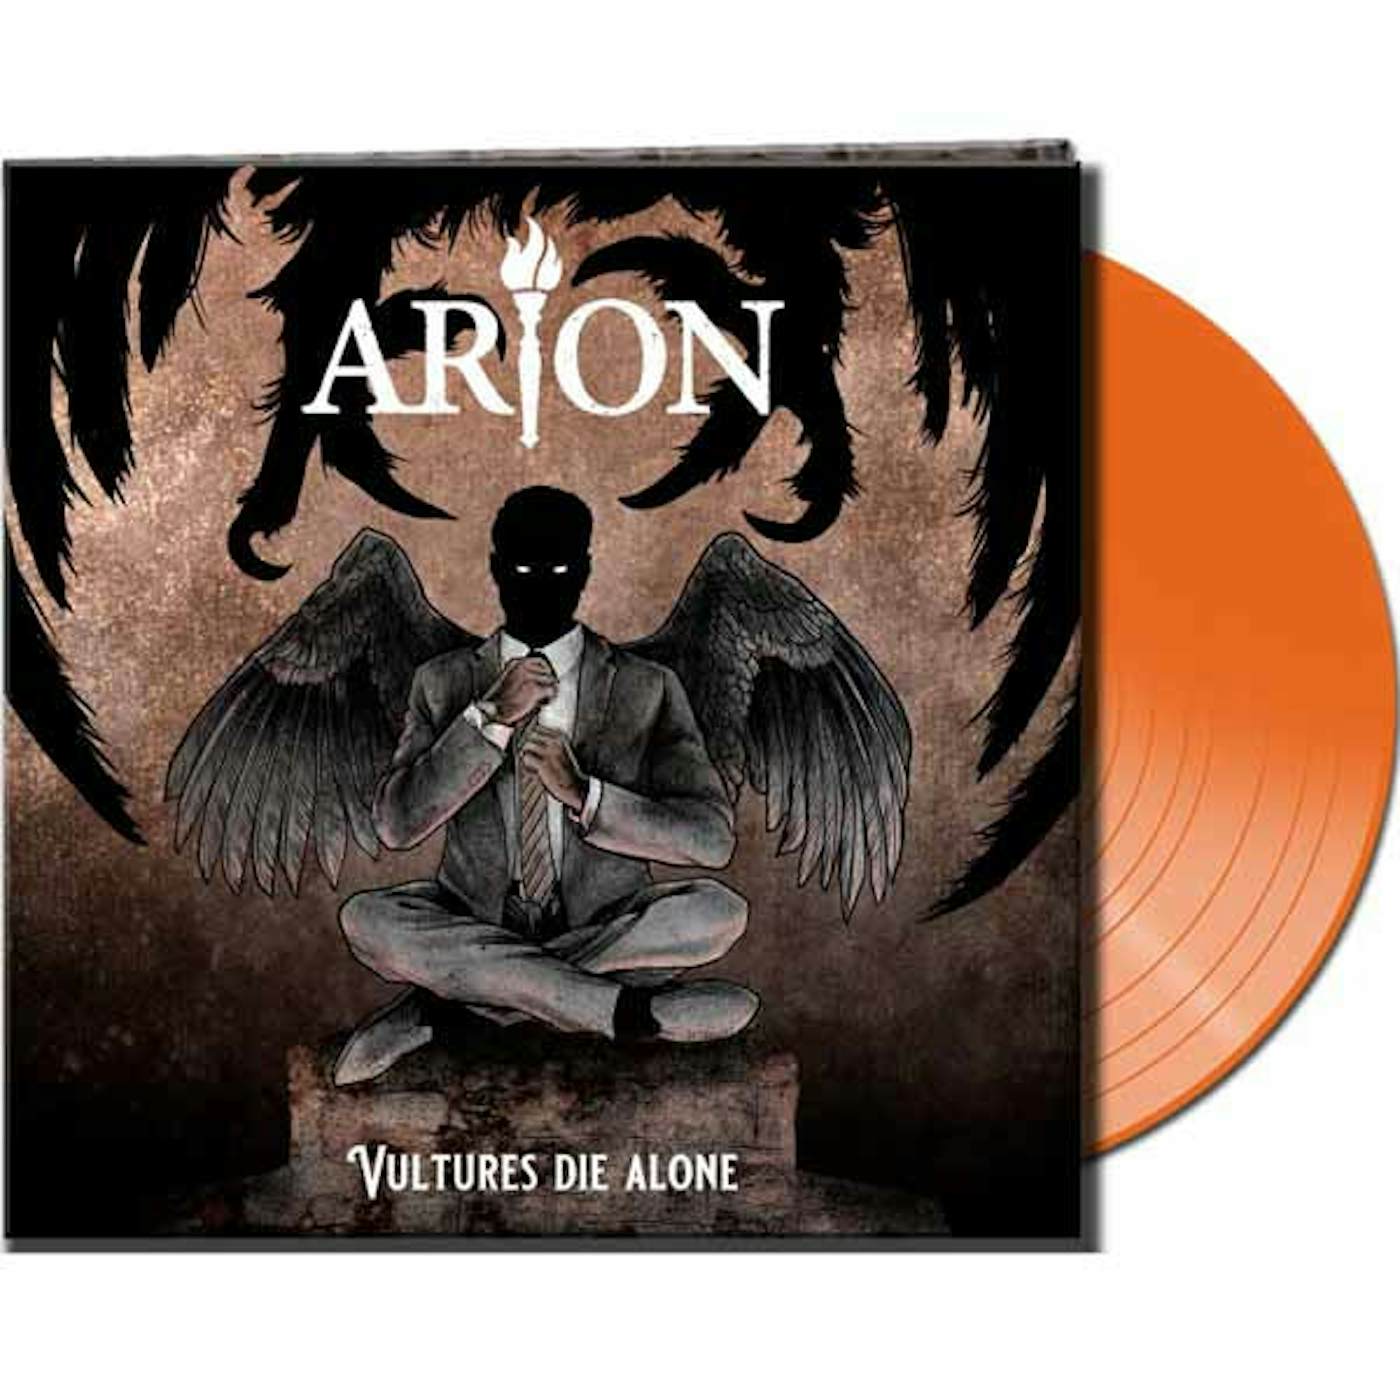 Arion LP - Vultures Die Alone (Orange Vinyl)